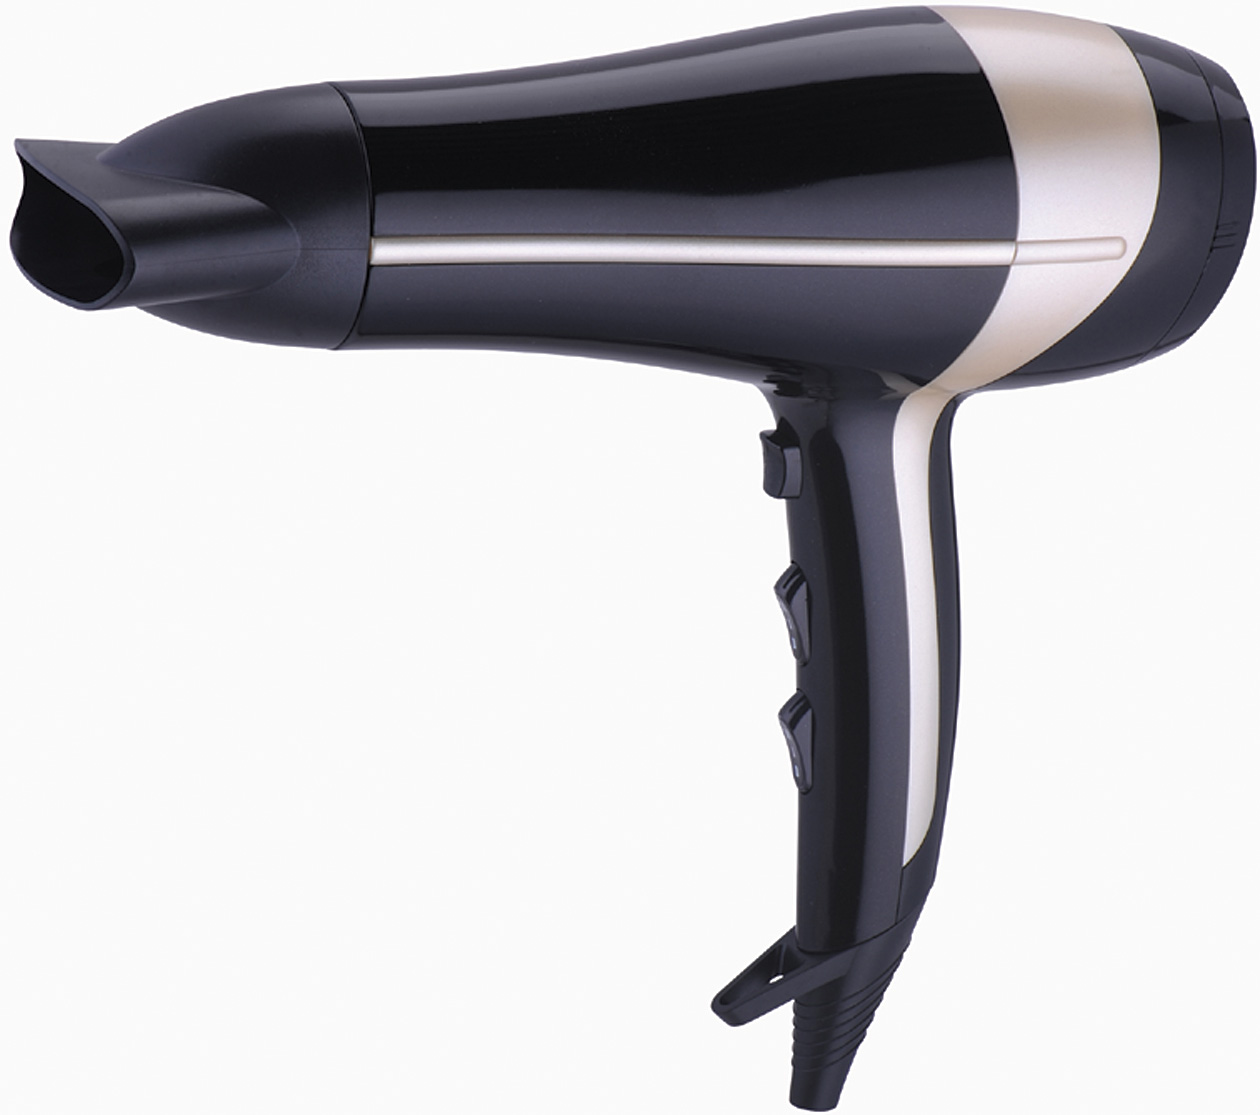 Salon Professional Hair Dryer 1800w